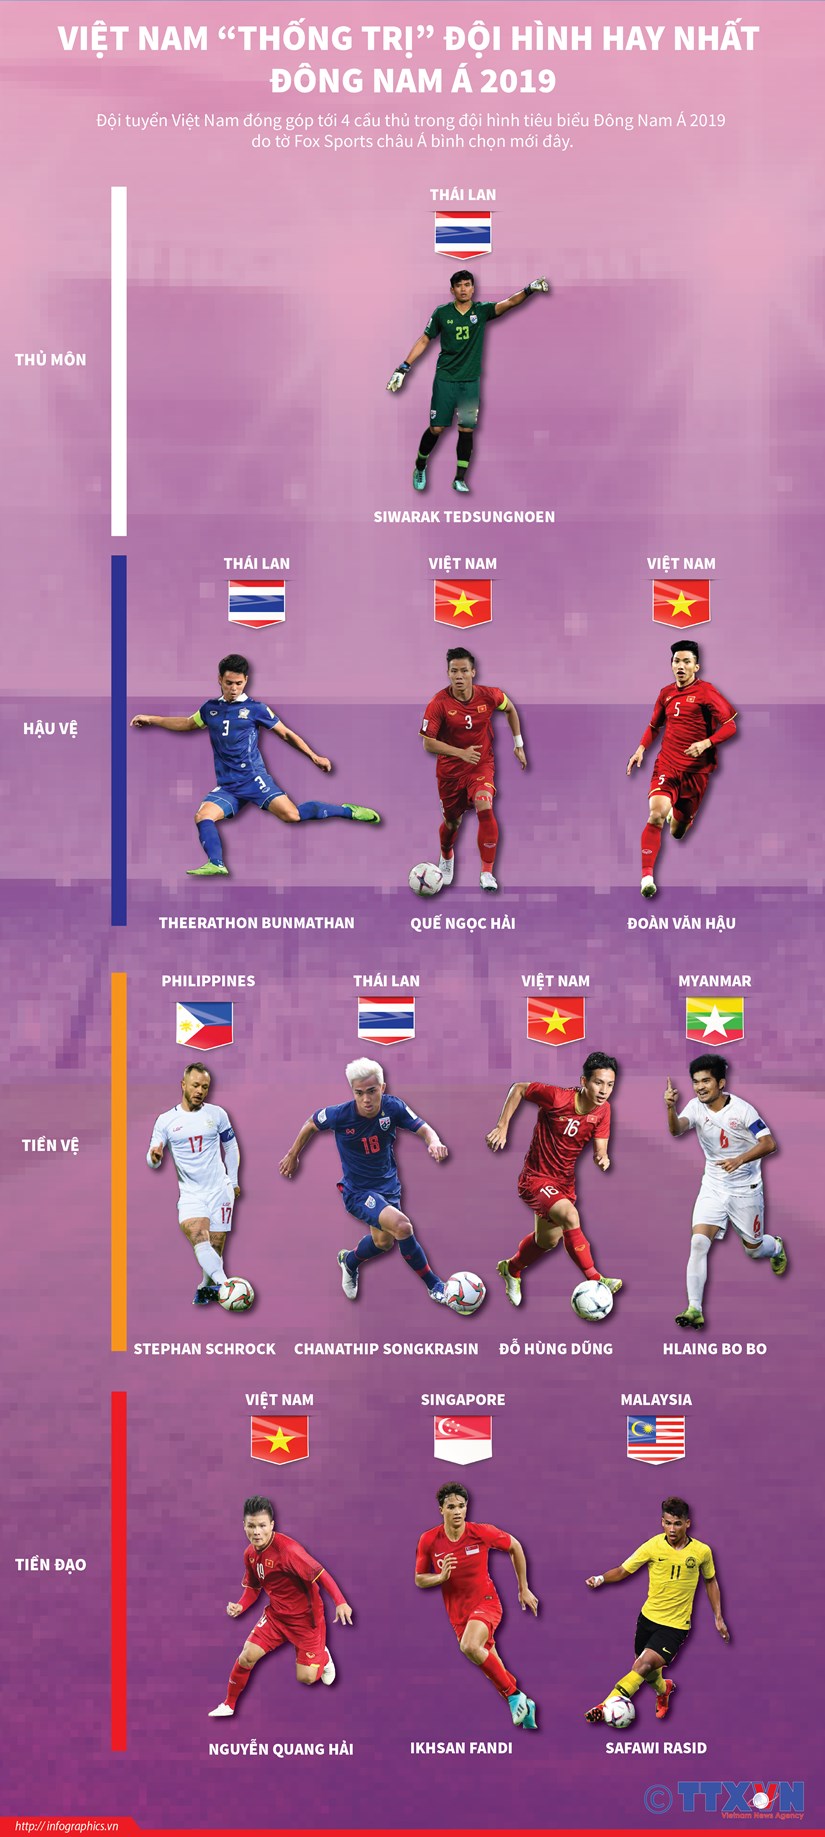 infographics diem mat doi hinh hay nhat dong nam a 2019